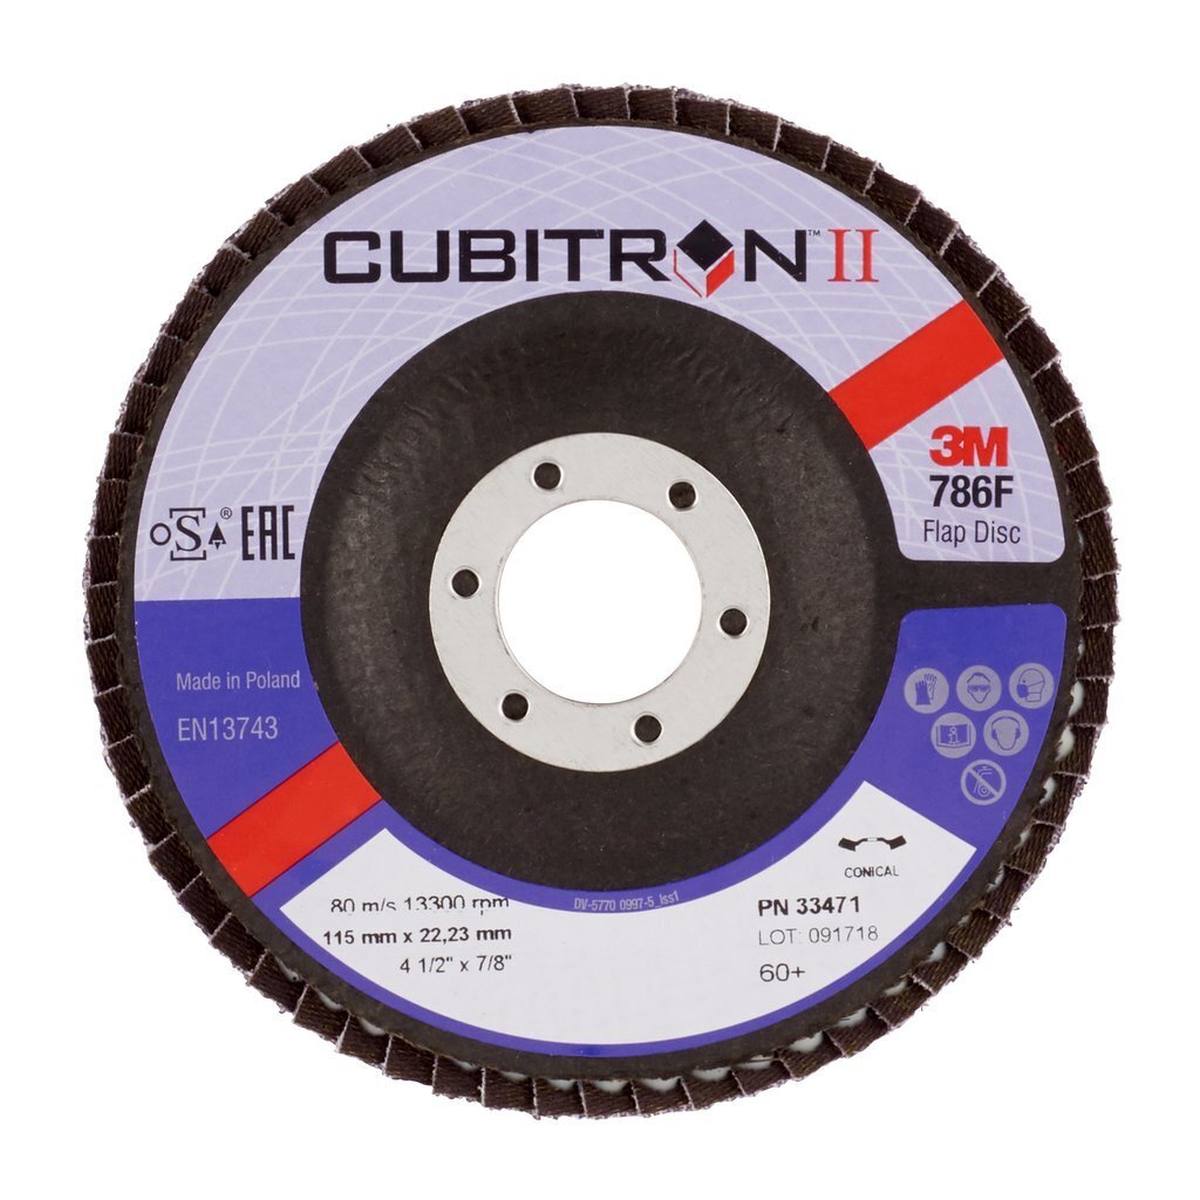 Discos de láminas 3M Cubitron II, 115 mm, 60+, orificio de 22 mm